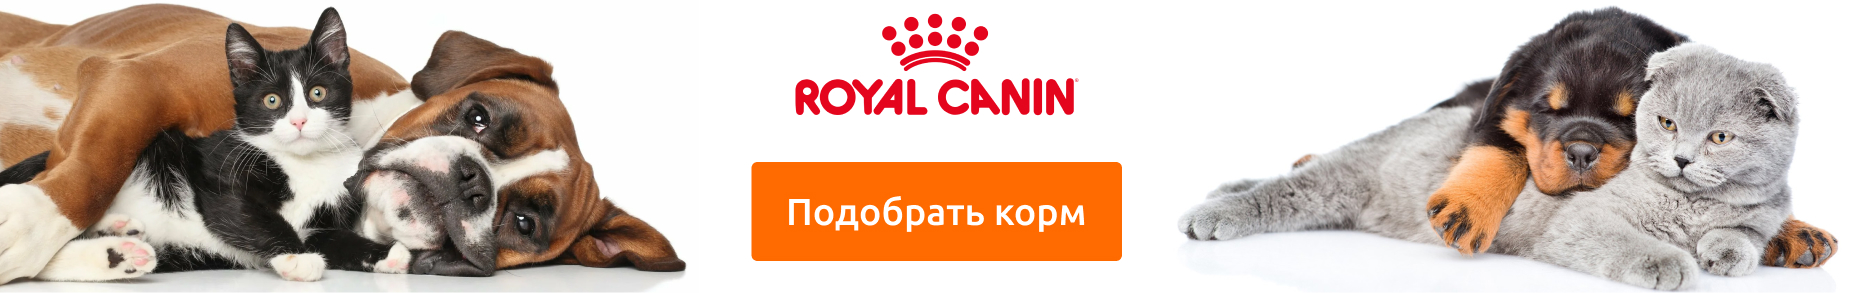 Подборк корма Royal Canin